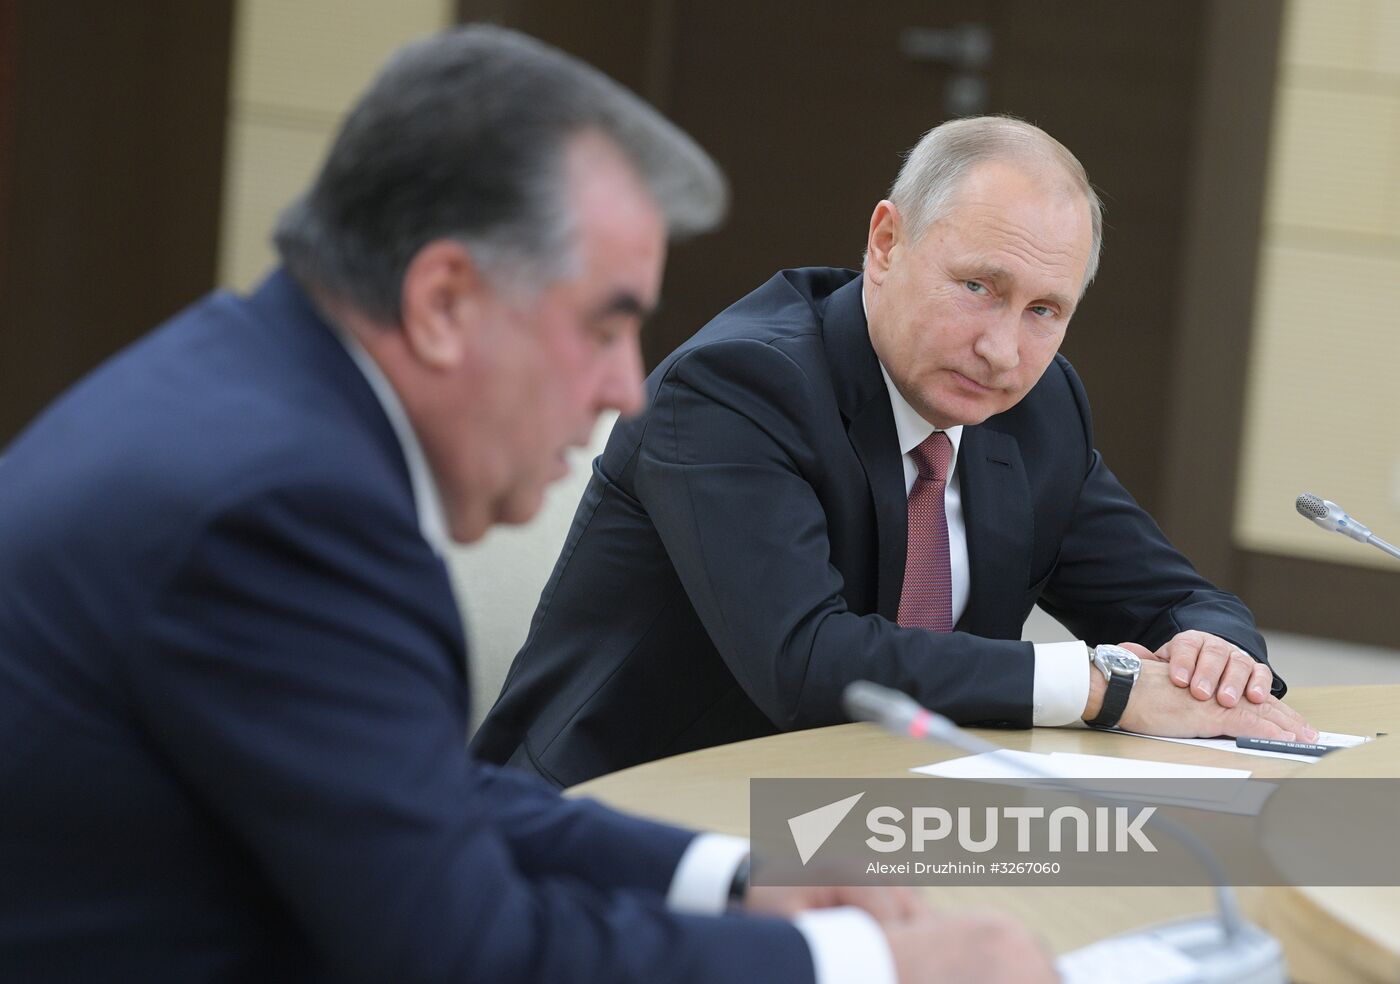 President Putin takes part in CIS leaders' informal meeting